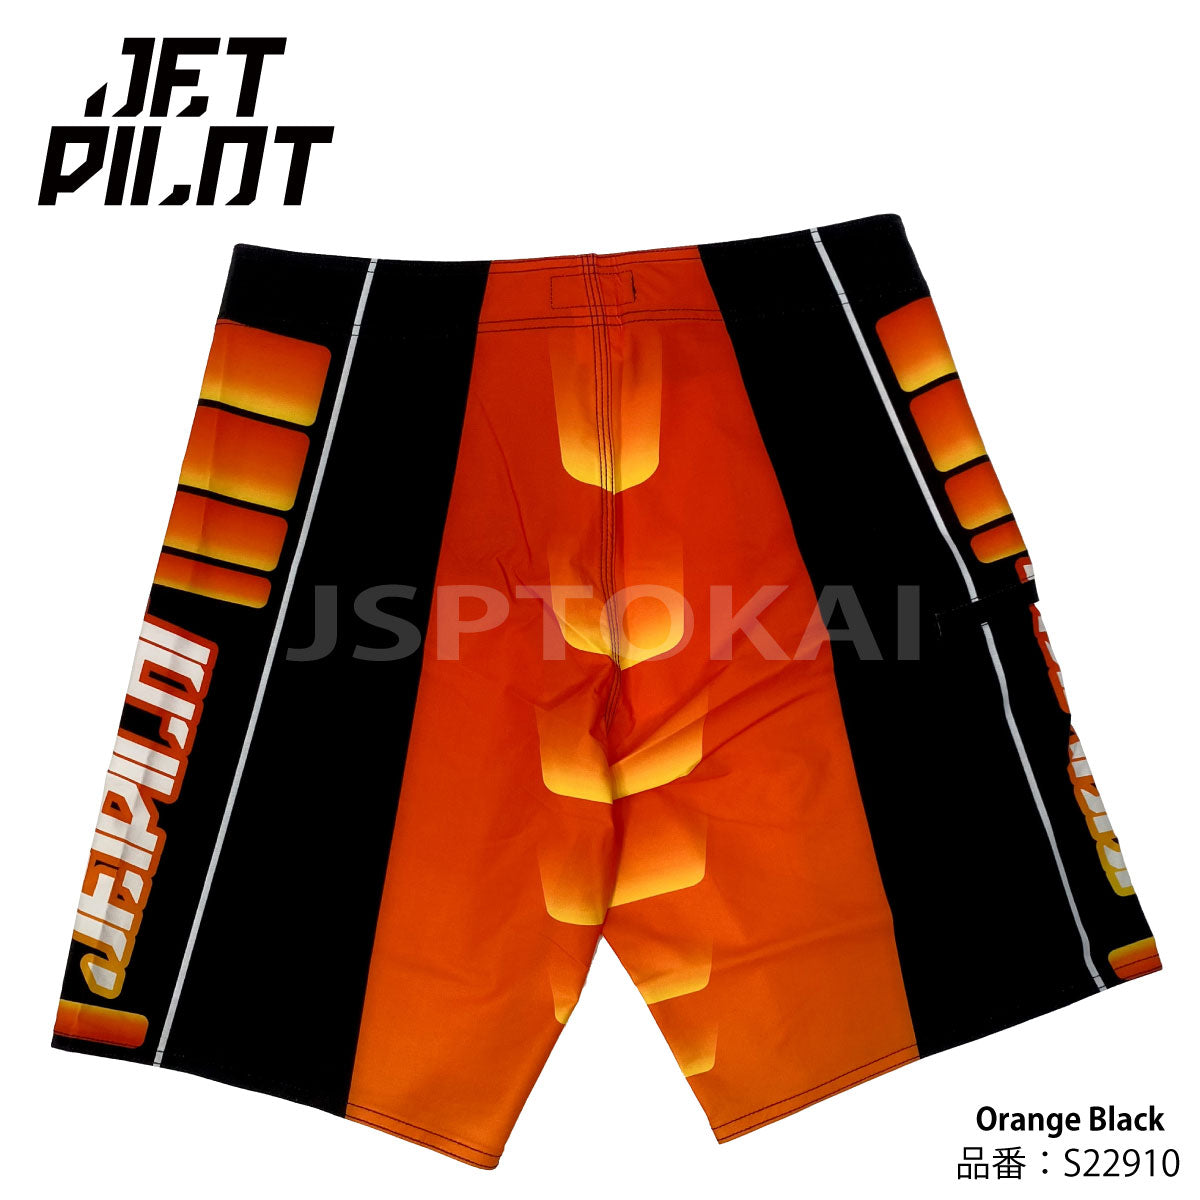 [SALE] JETPILOT Jet Pilot PODIUM MEN'S BOARDSHORTS Board Shorts S22910